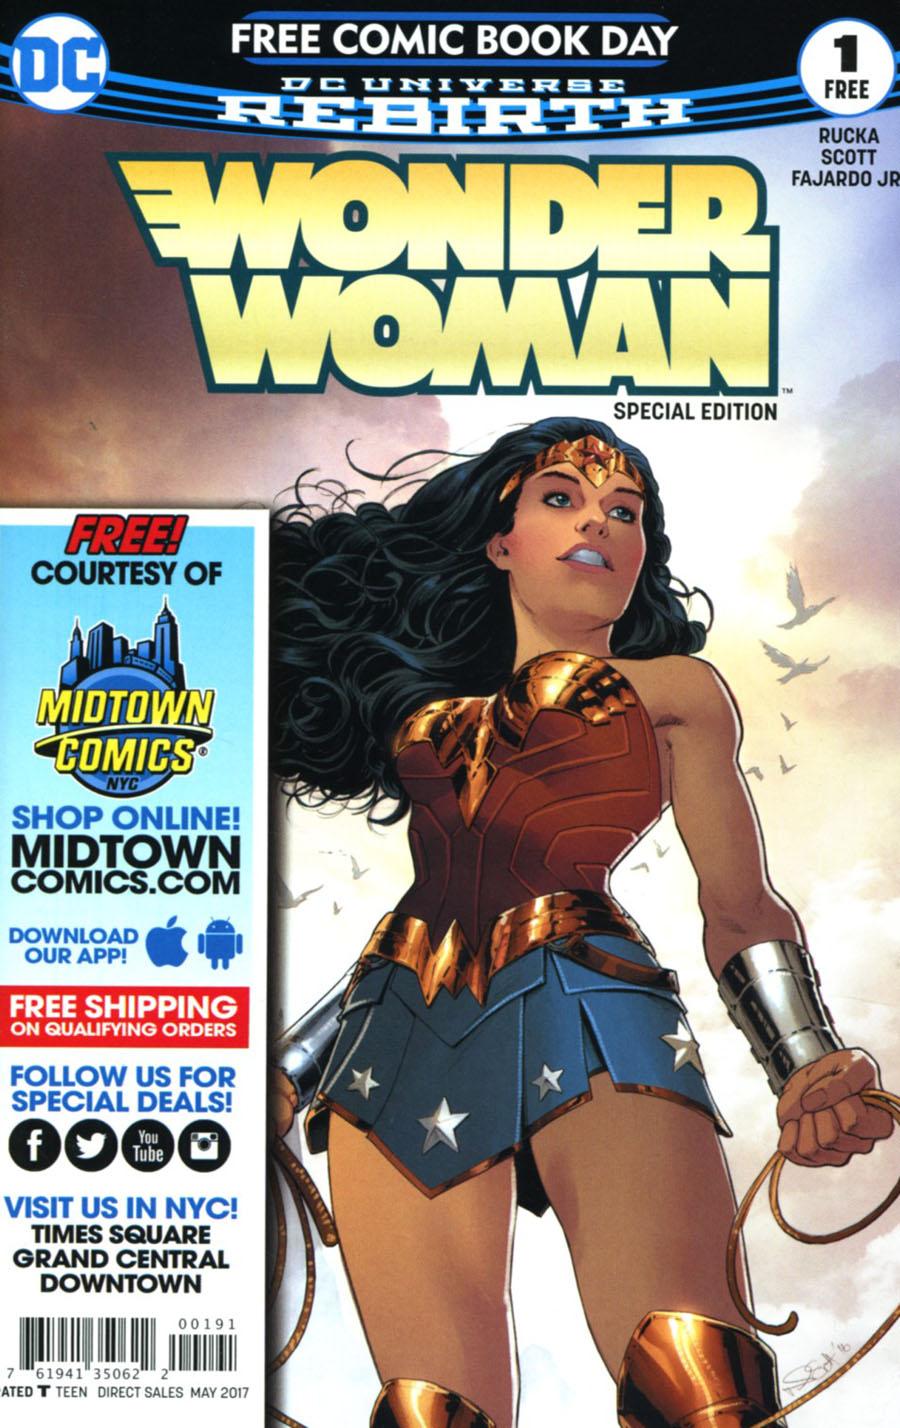 FCBD 2017 Wonder Woman Vol. 5 #1